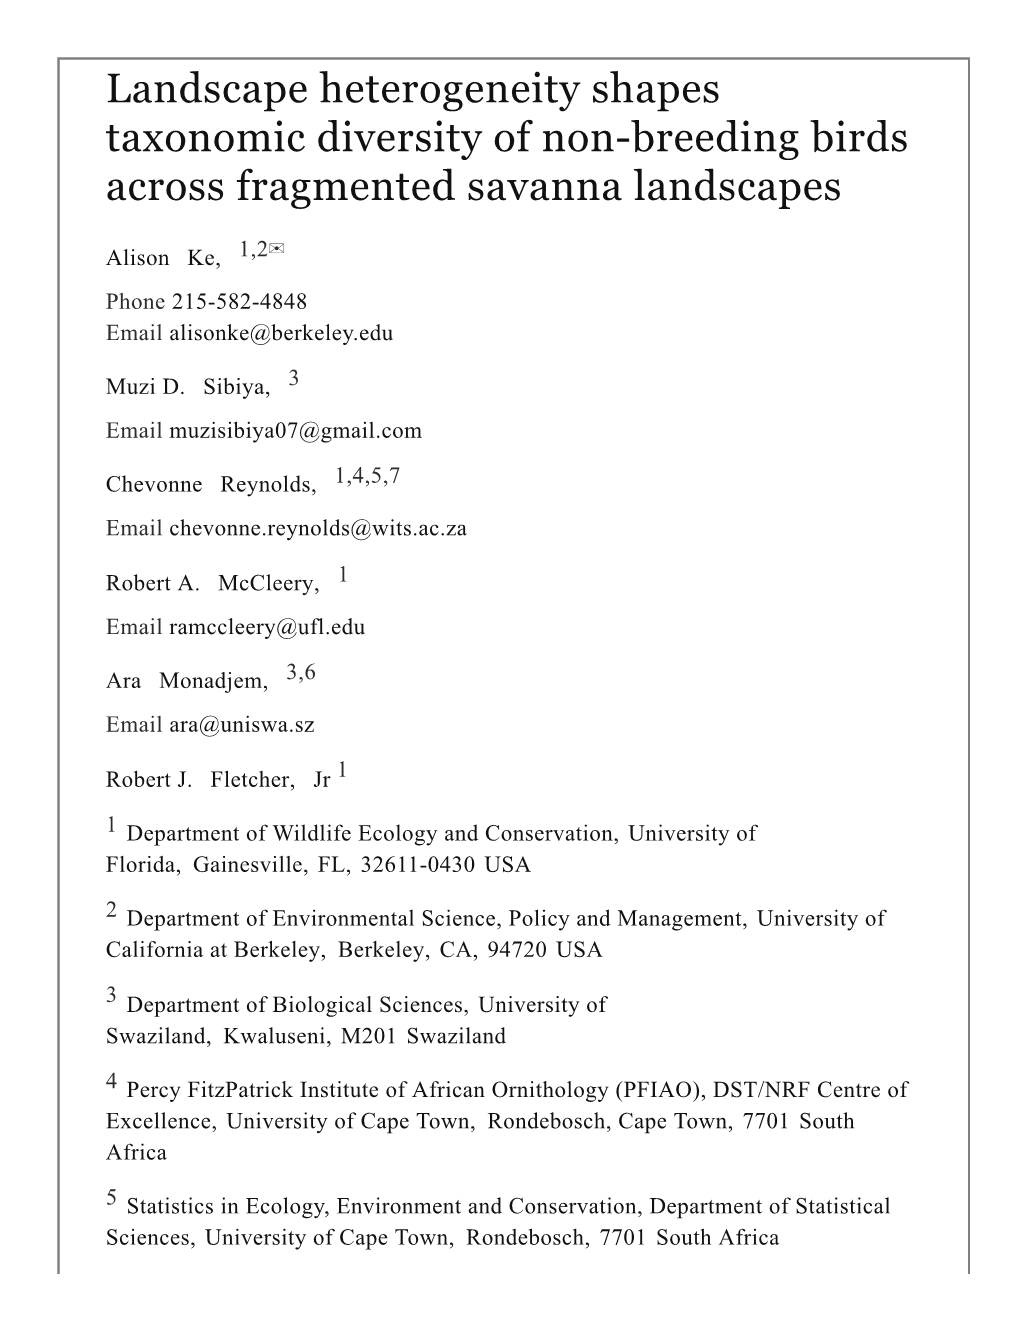 Landscape Heterogeneity Shapes Taxonomic Diversity of Non-Breeding Birds Across Fragmented Savanna Landscapes